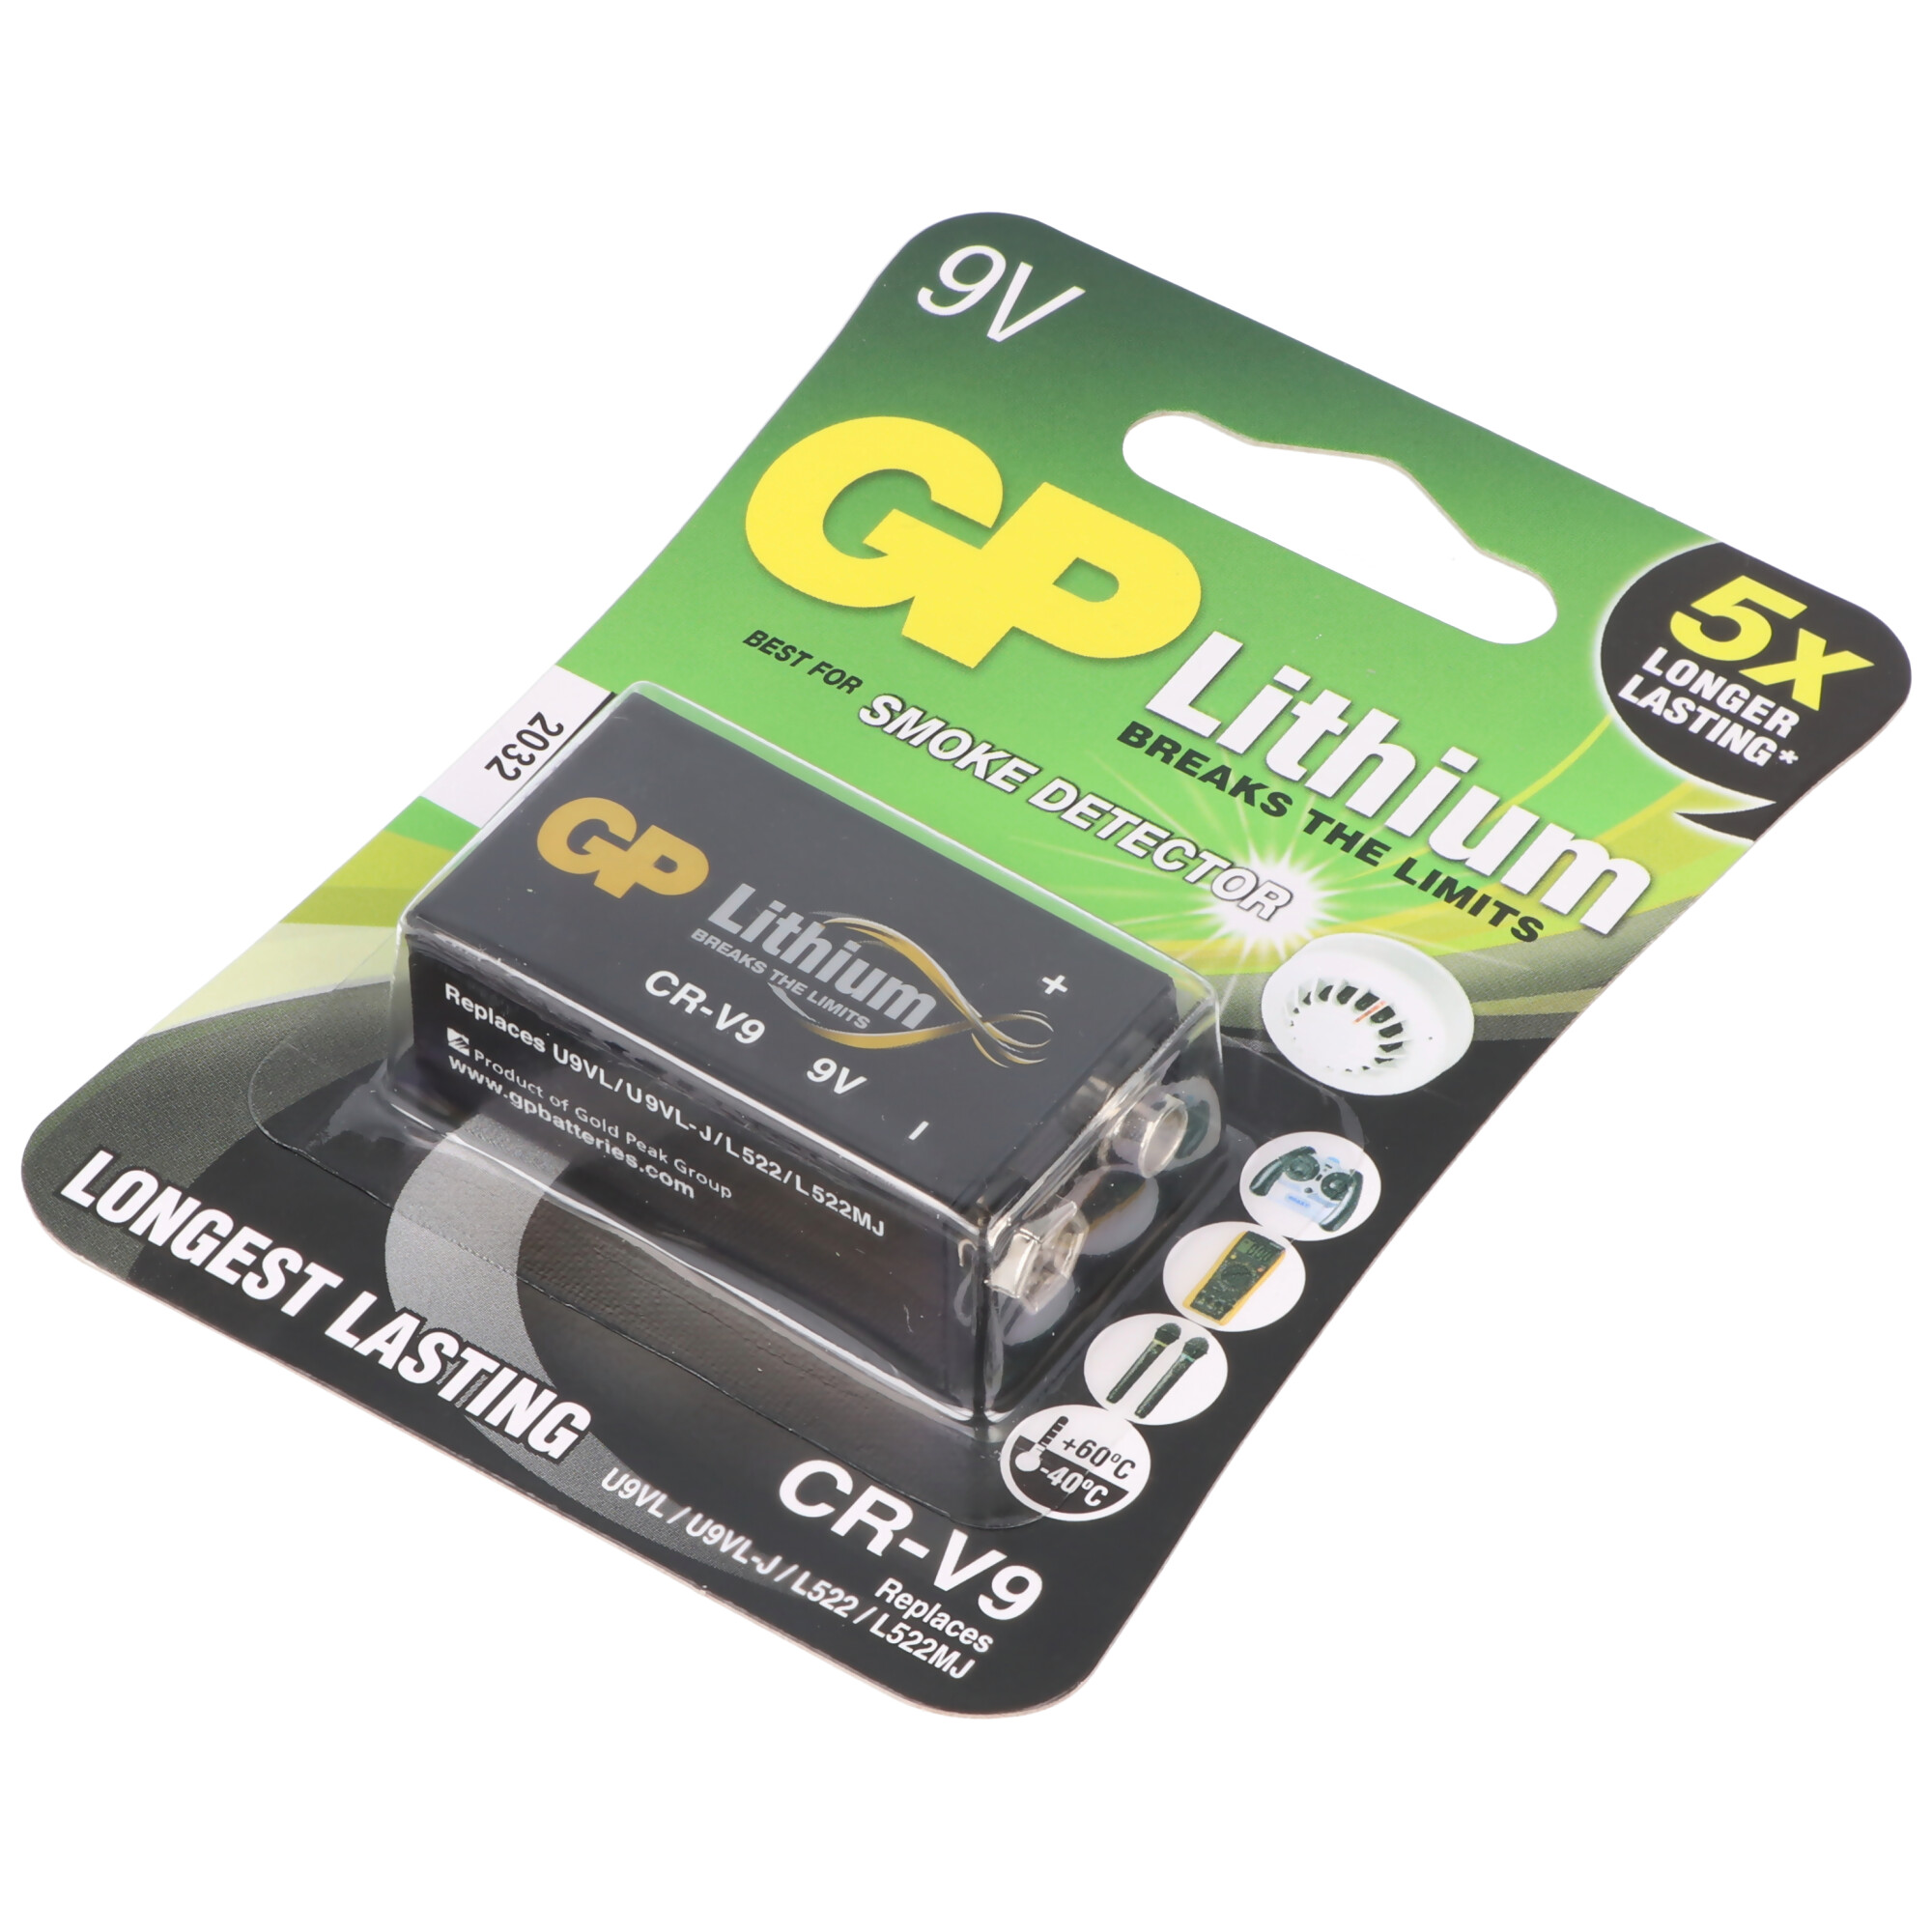 9V Batterie GP Lithium 1 Stück